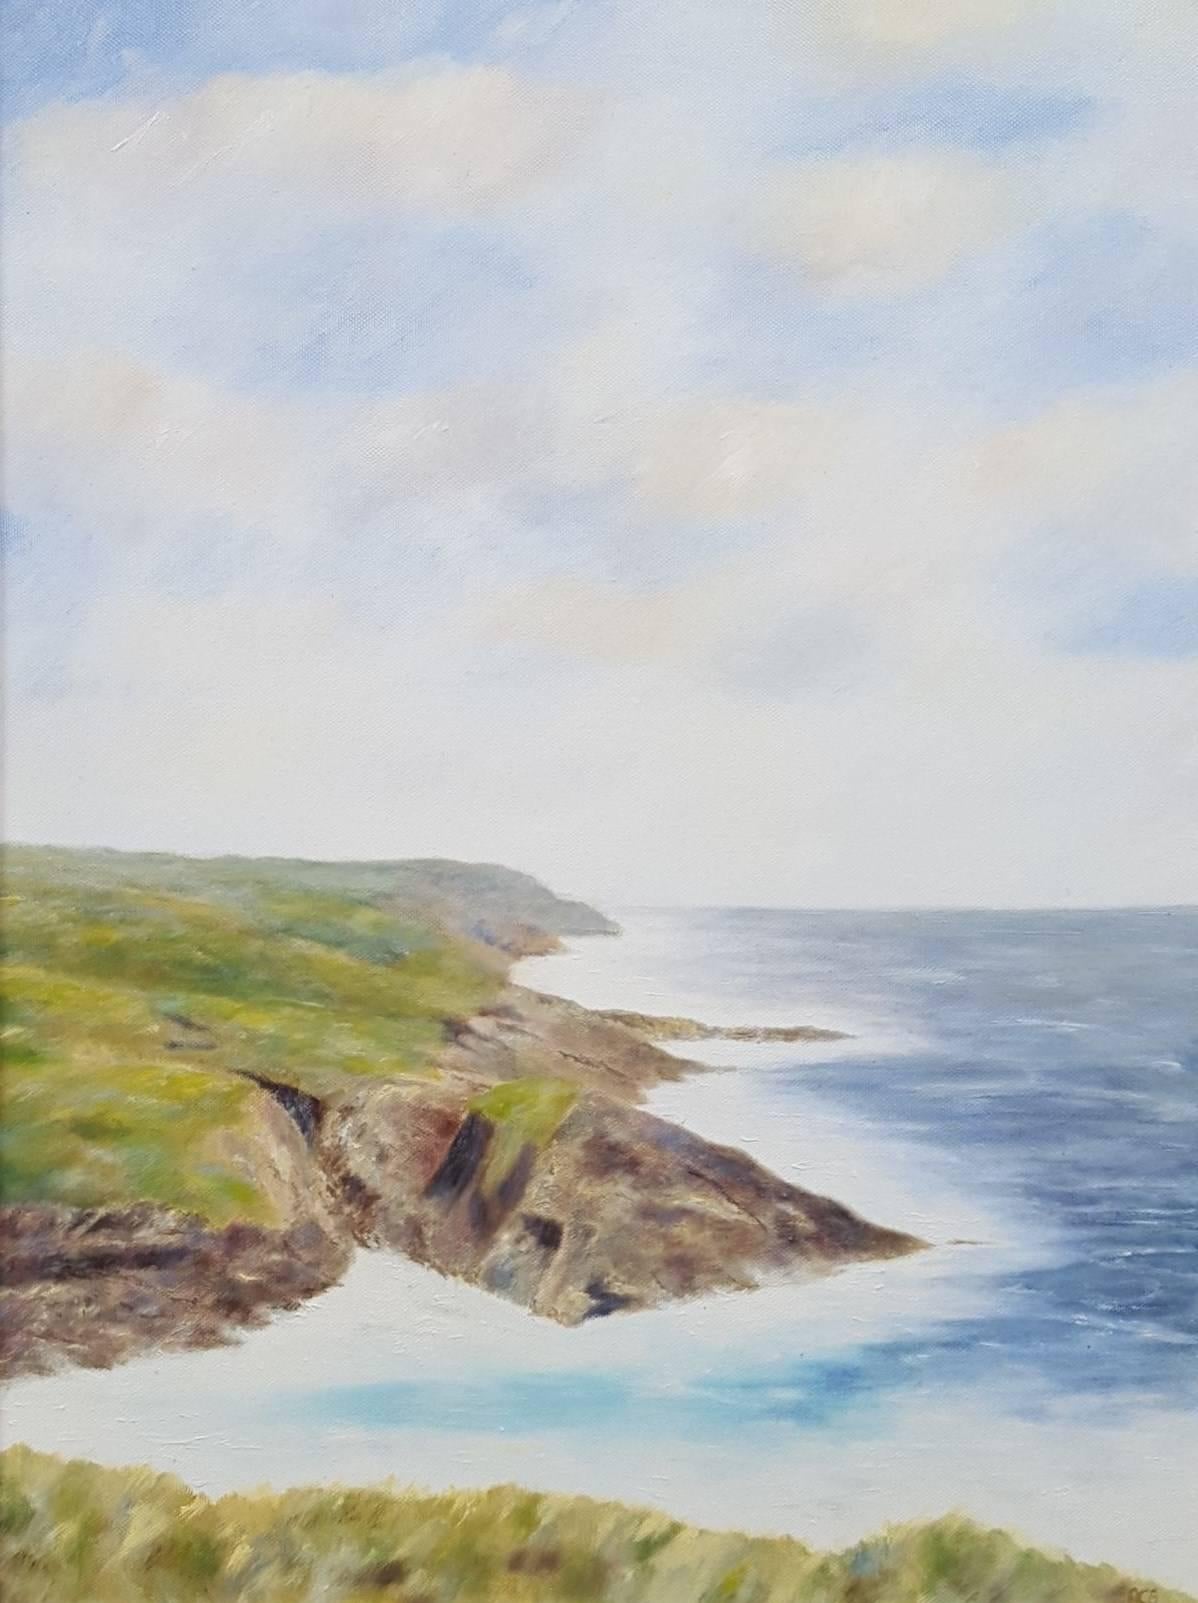 Alastair Campbell-Binning Landscape Painting - Pendeen Coast, Cornwall